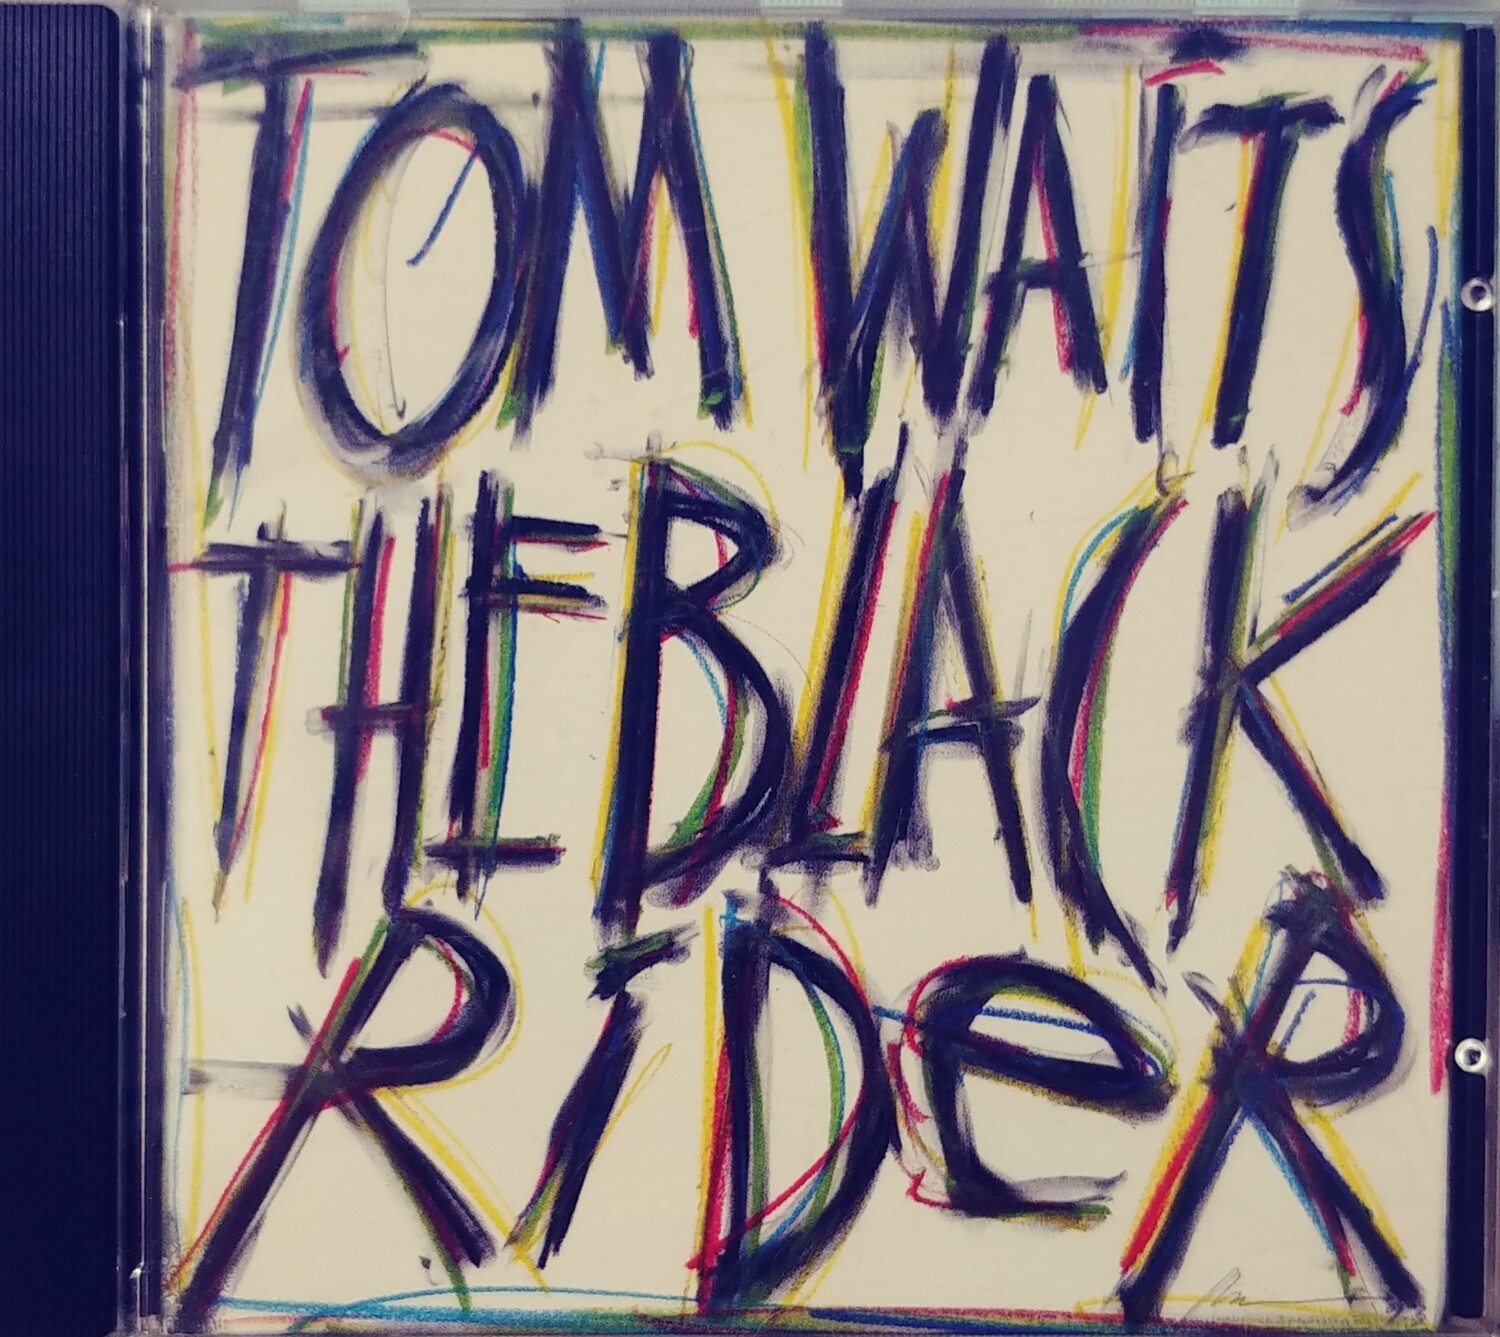 Tom Waits - The Black Rider (CD)